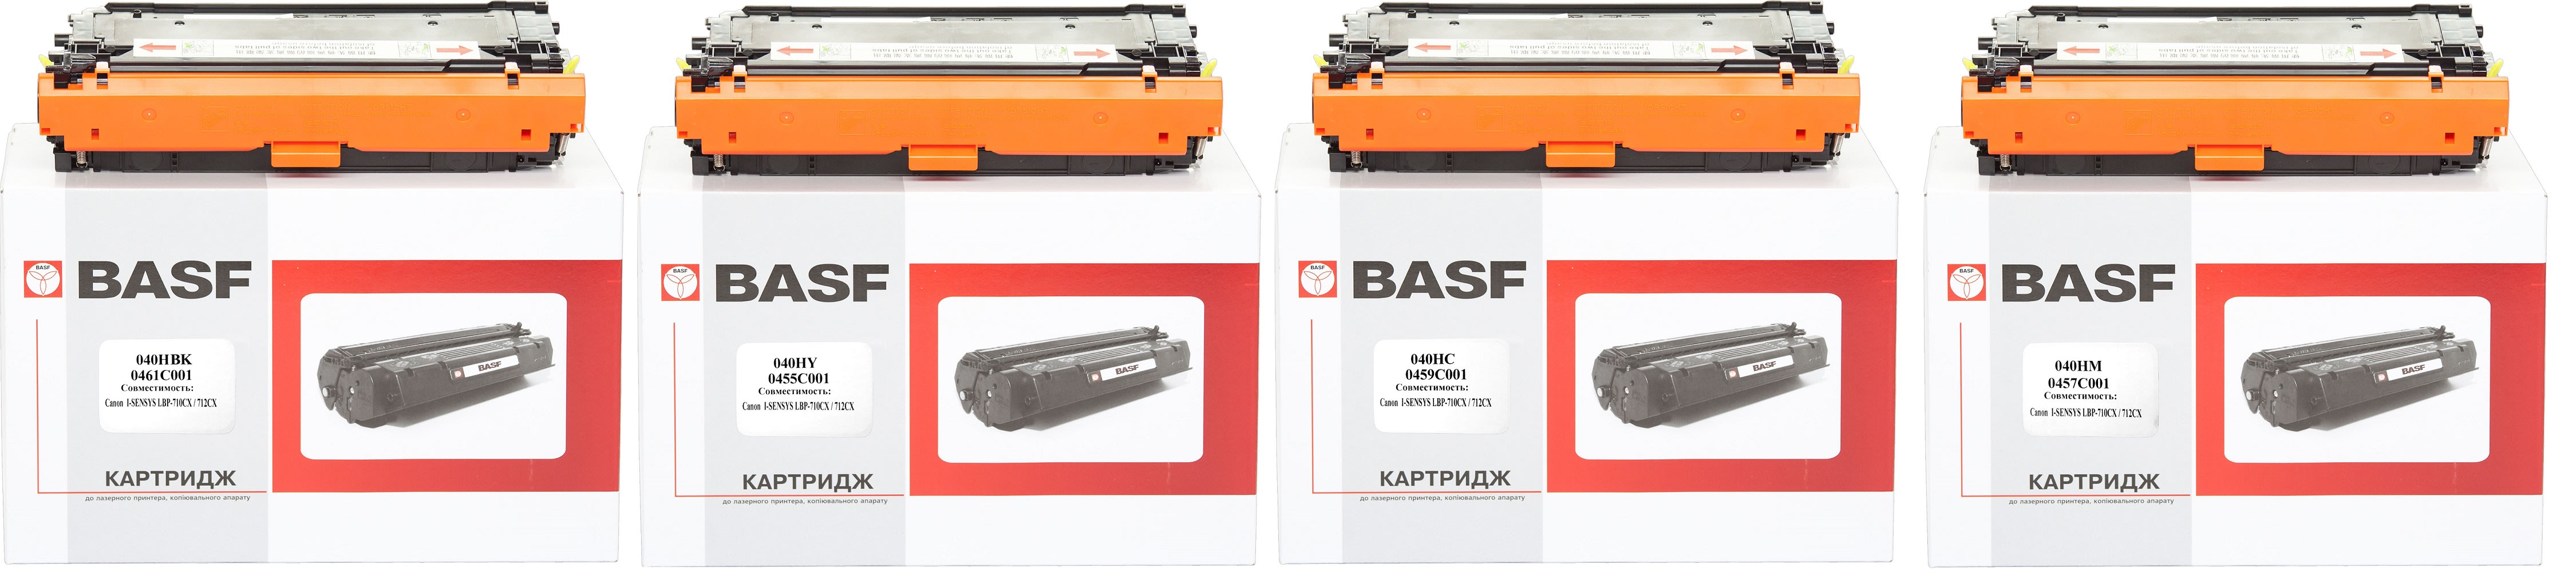 Картриджи BASF-KT-040H для Canon i-Sensys LBP-710cx Купить картриджи.